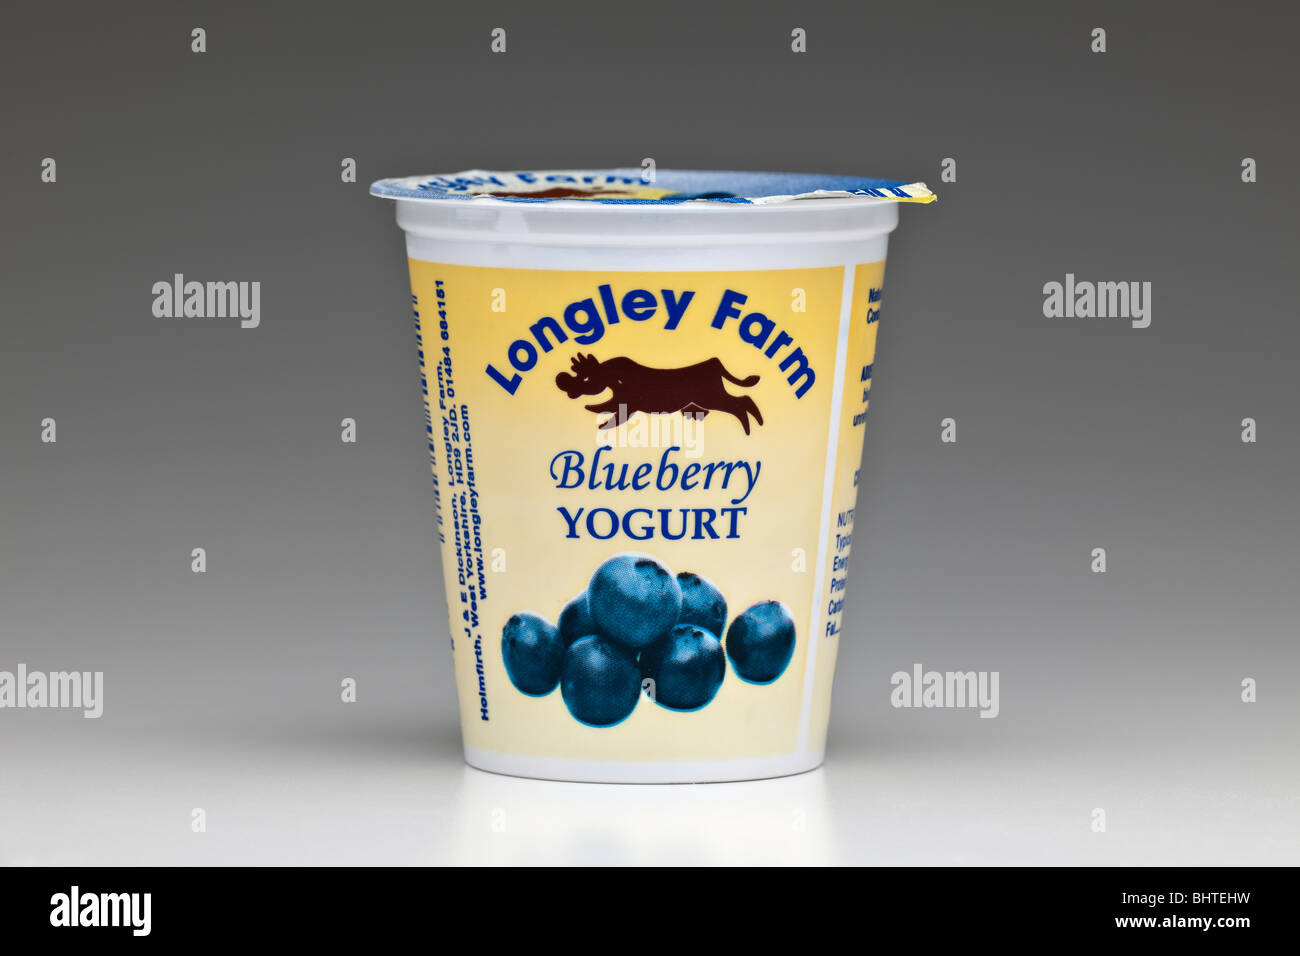 Longley farm Blueberry Yogurt Stock Photo